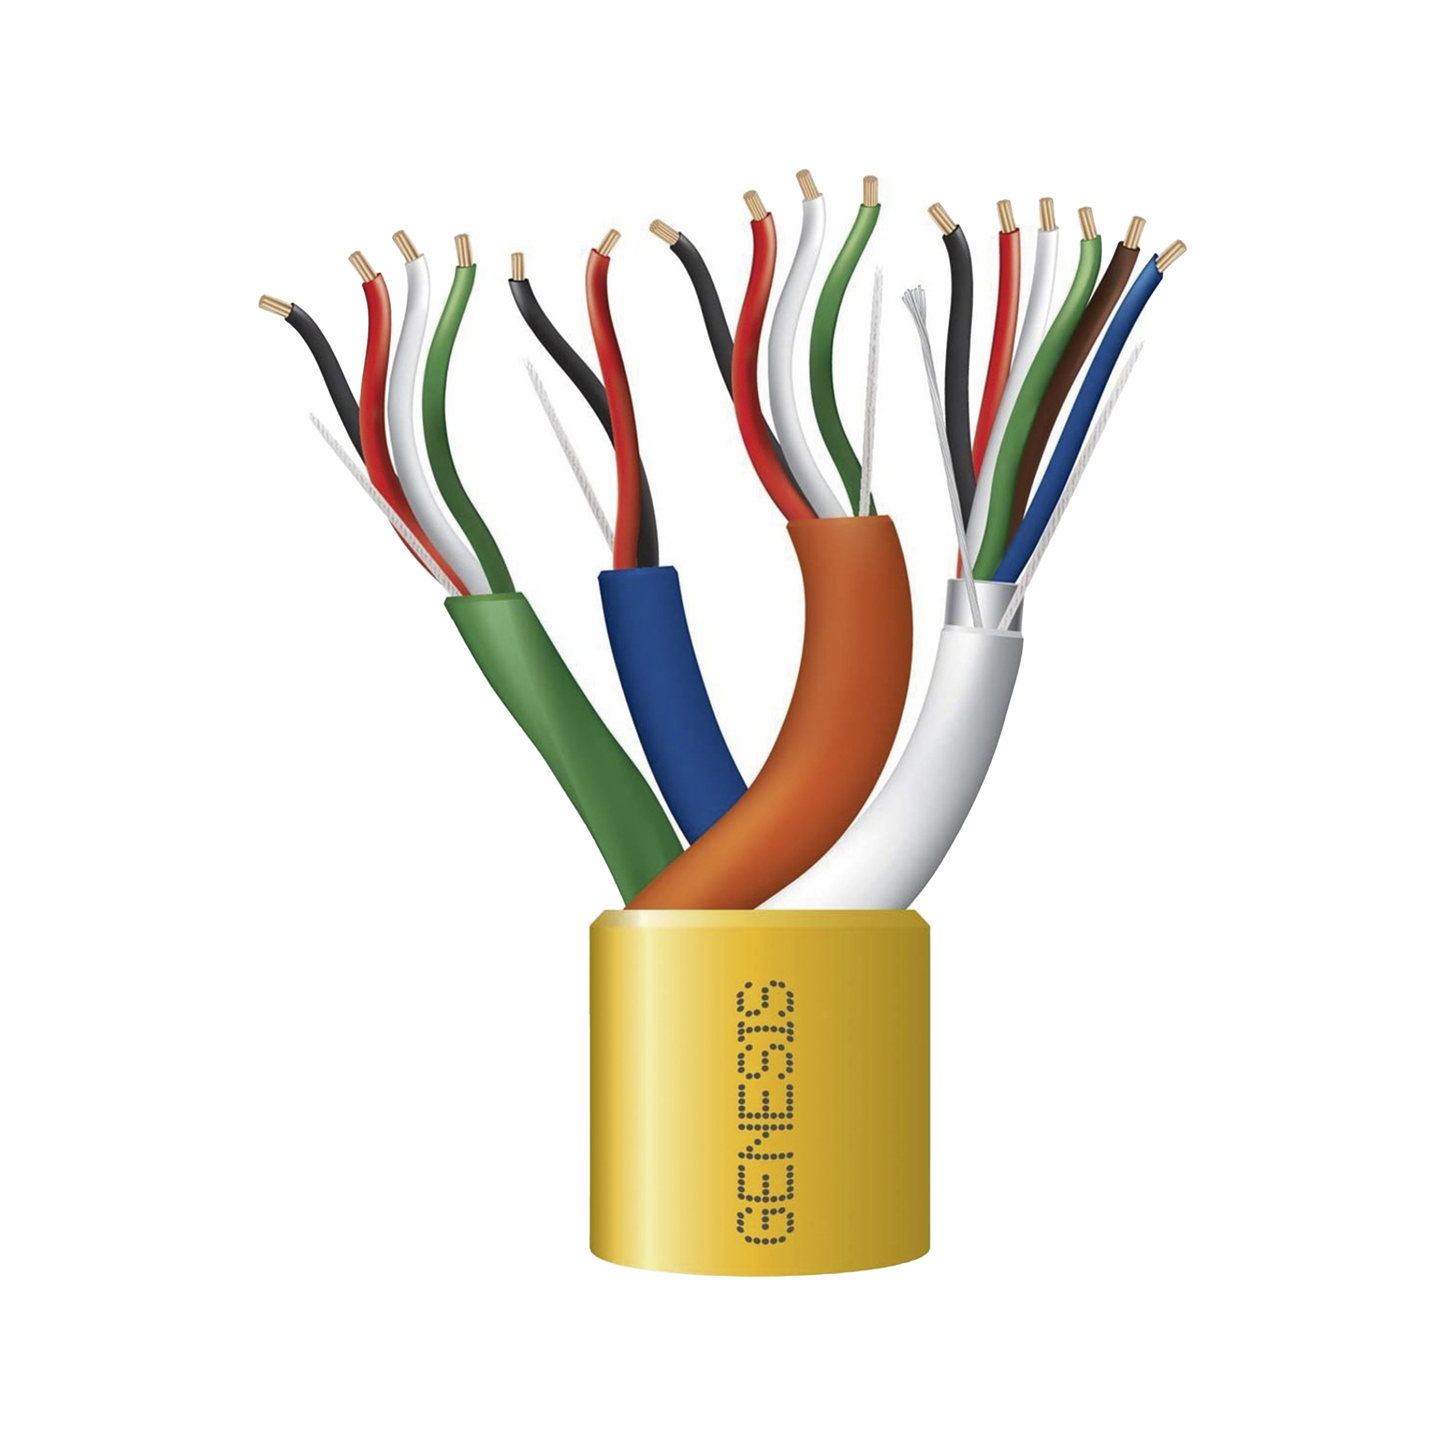 Bobina de cable de 305 metros, color amarillo, compuesto por:  6 x 22 AWG blindados, 4 x 18 AWG, 4 x 22 AWG, y 2 x 22 AWG, para aplicaciones en control de acceso.